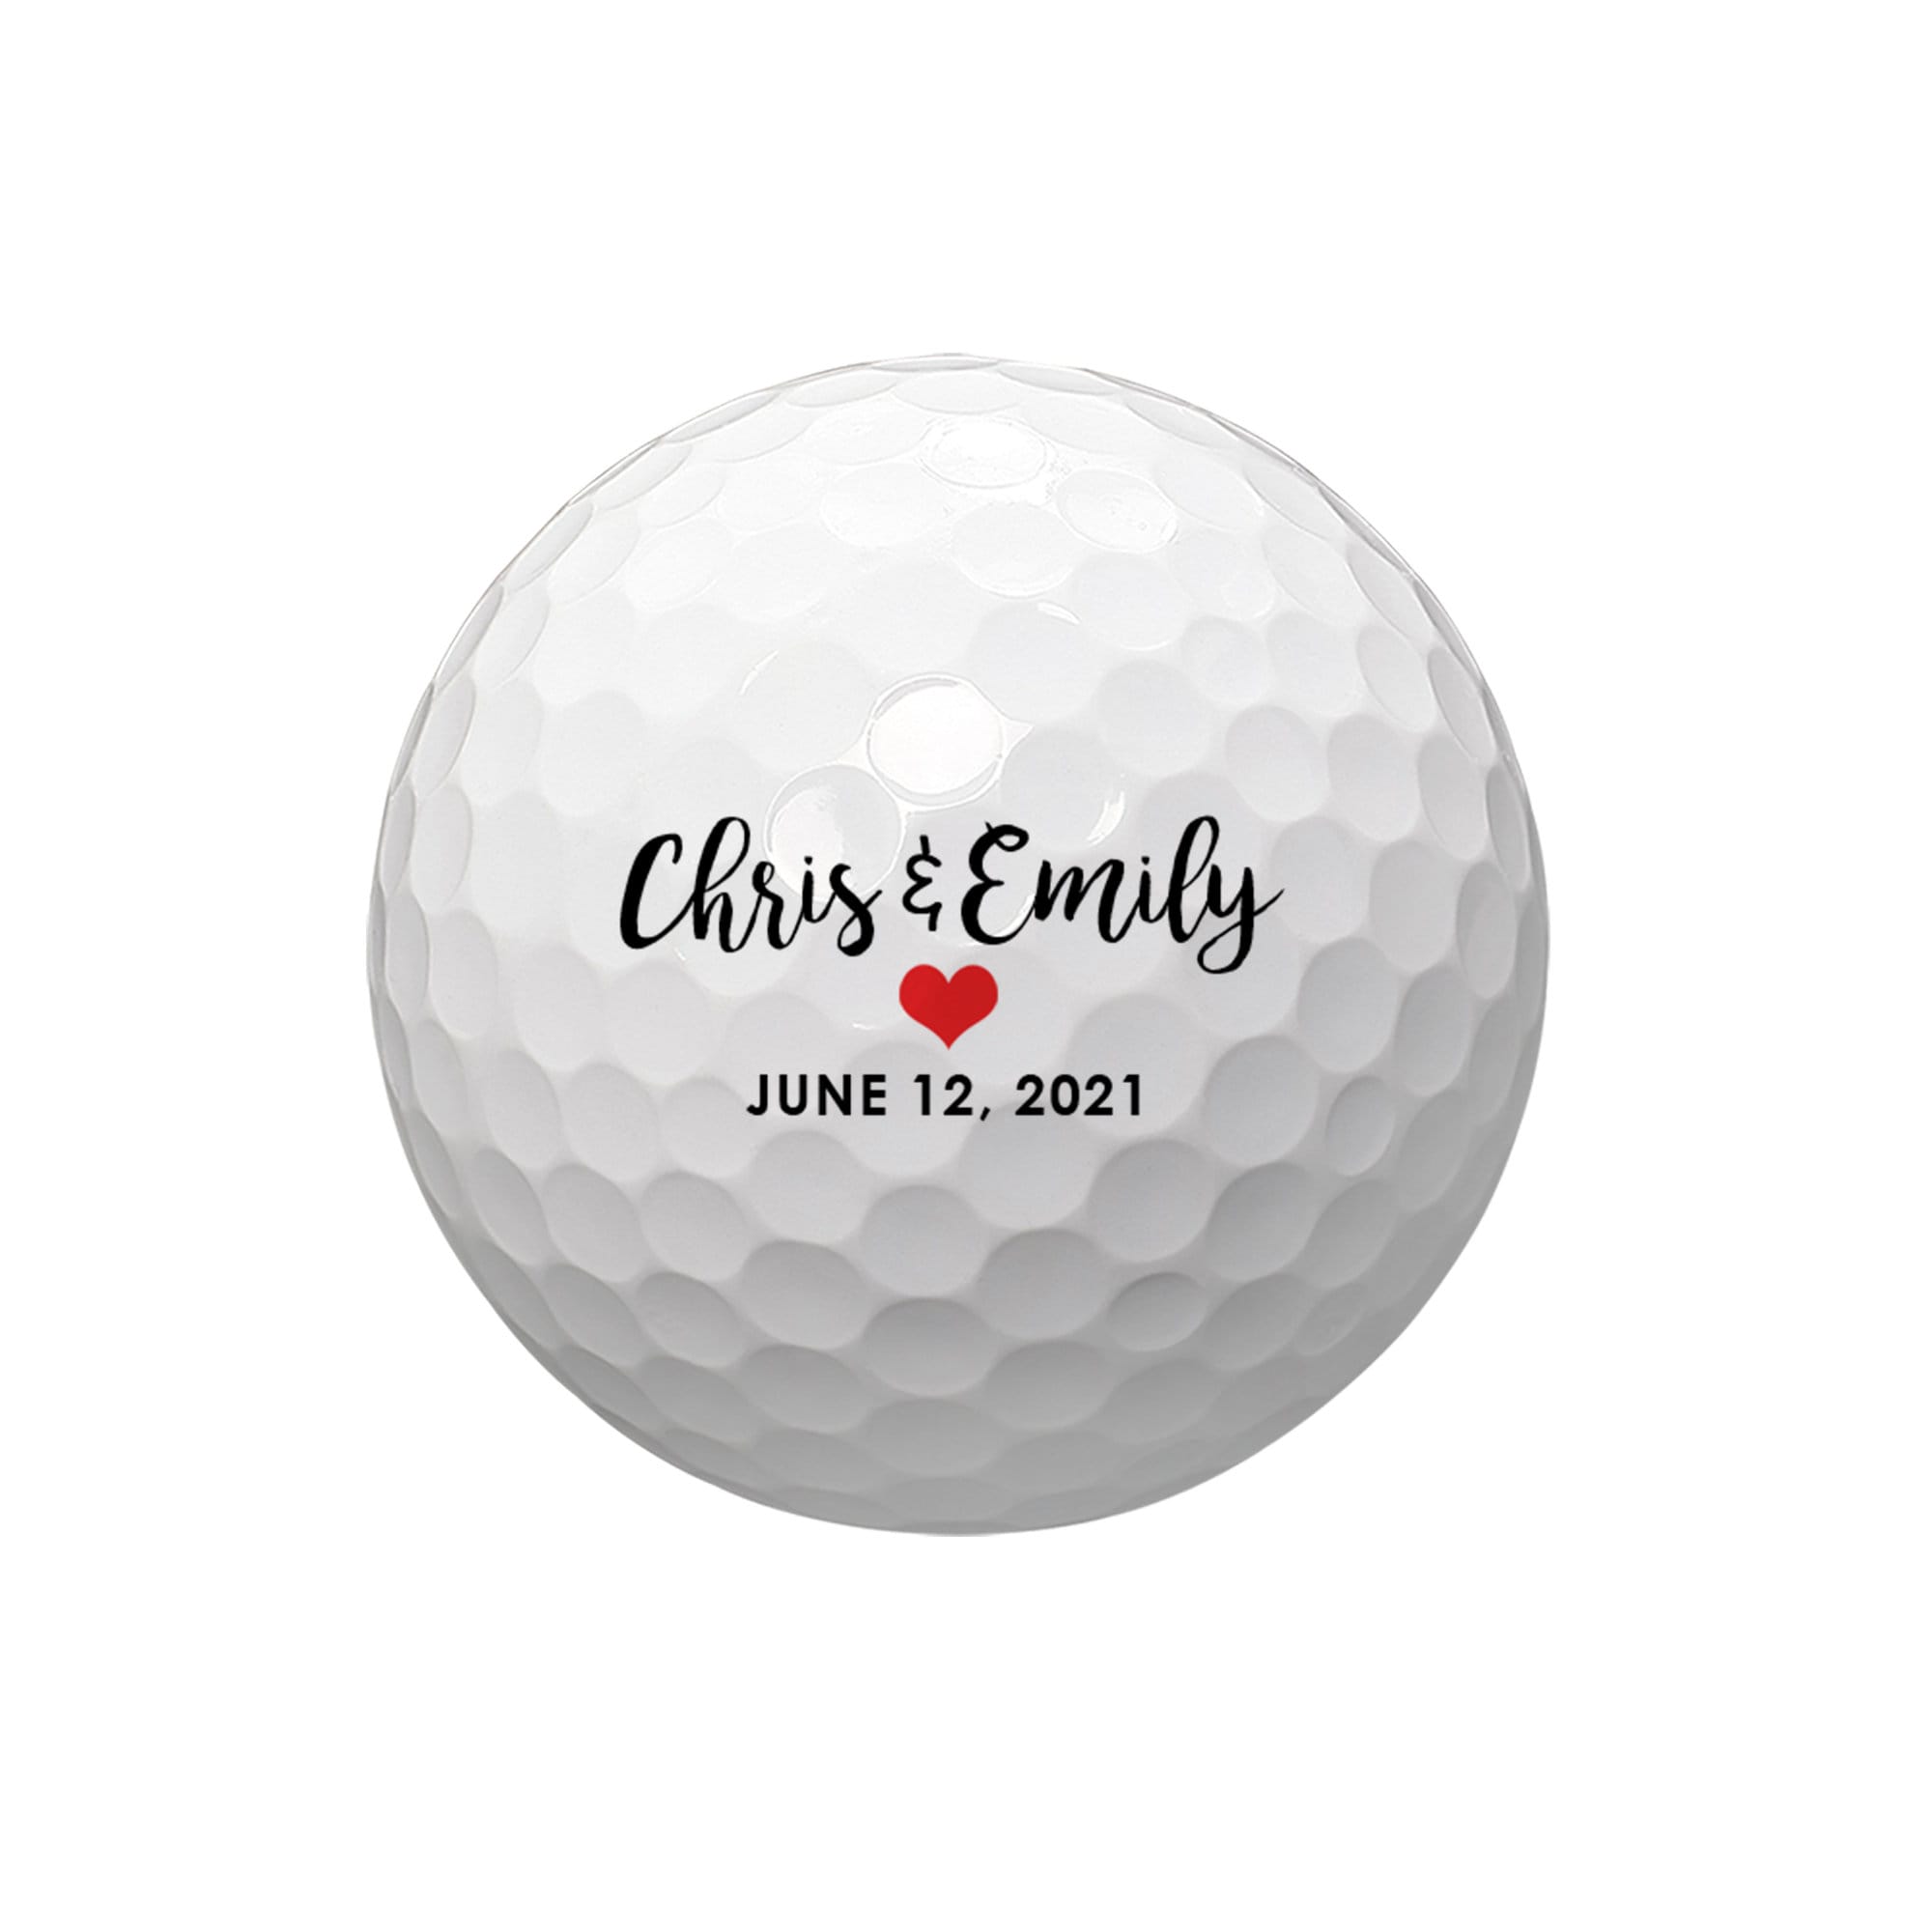 RBRSLALA Funny Golf Balls Golf Balls for Men Golf Balls 6 Pack Colored Golf  Balls Cool Golf Balls Golf Gifts for Kids Novelty Golf Balls Cheap Golf